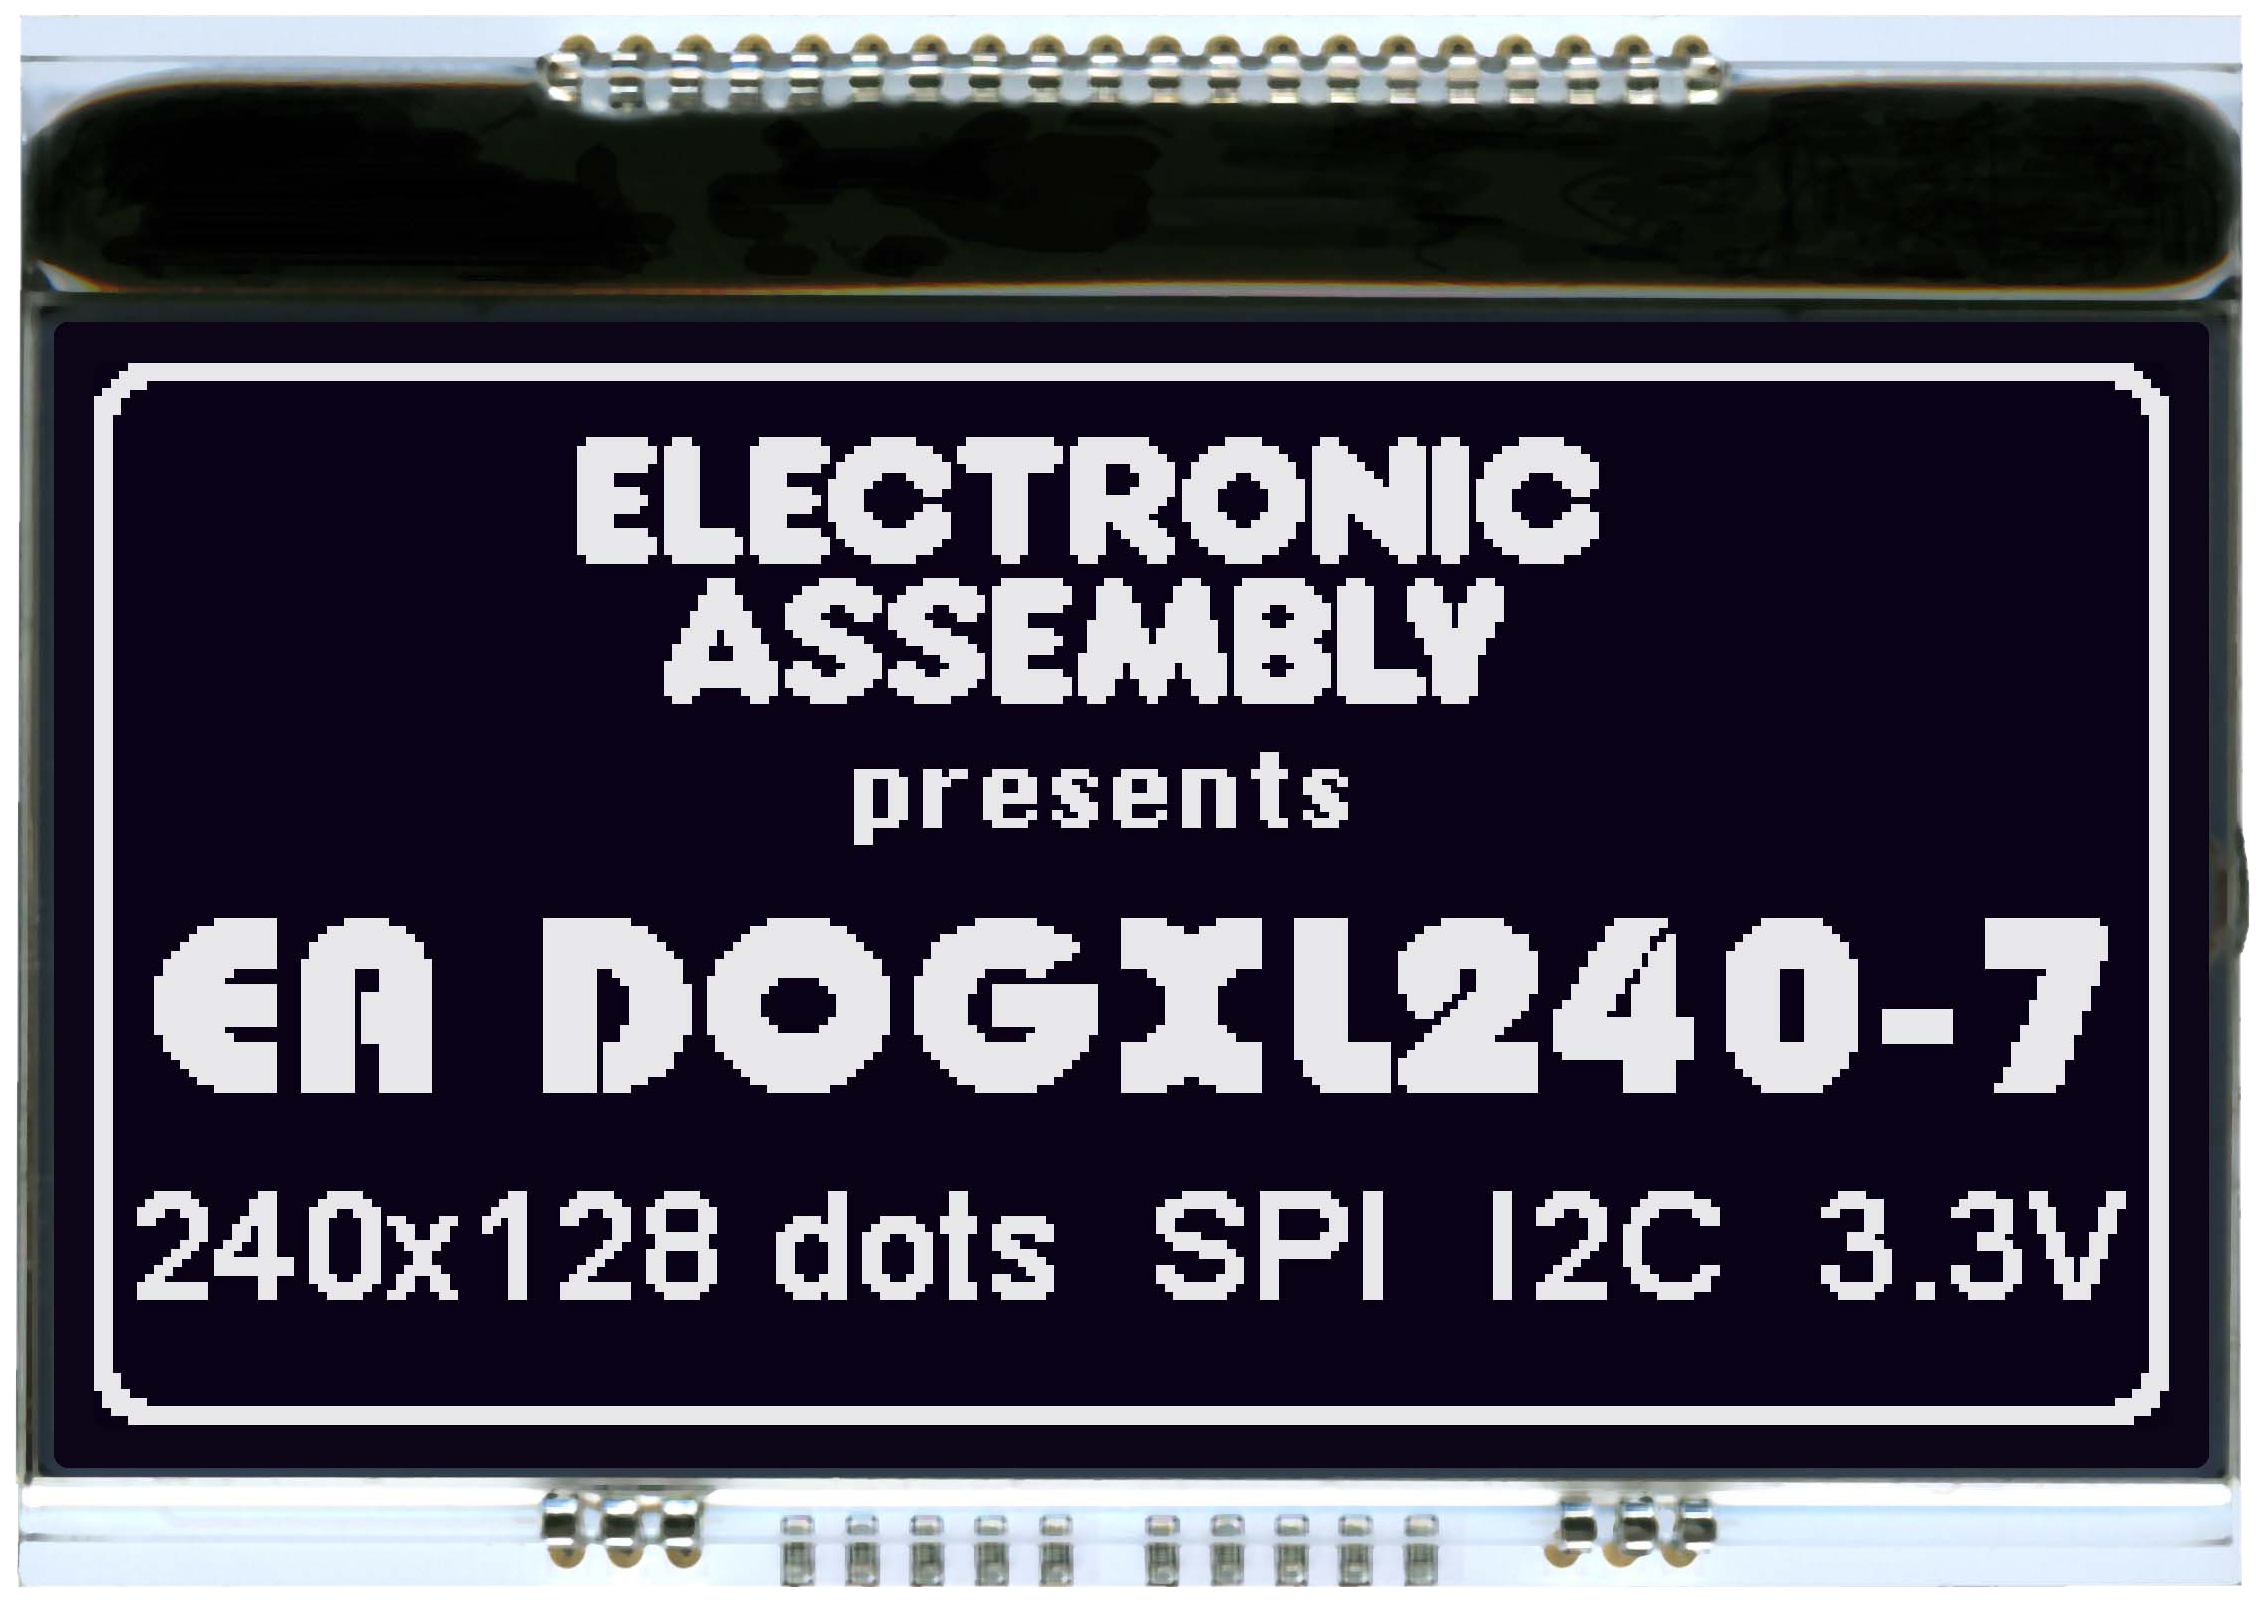 240x128 DOG Graphic Display EA DOGXL240S-7